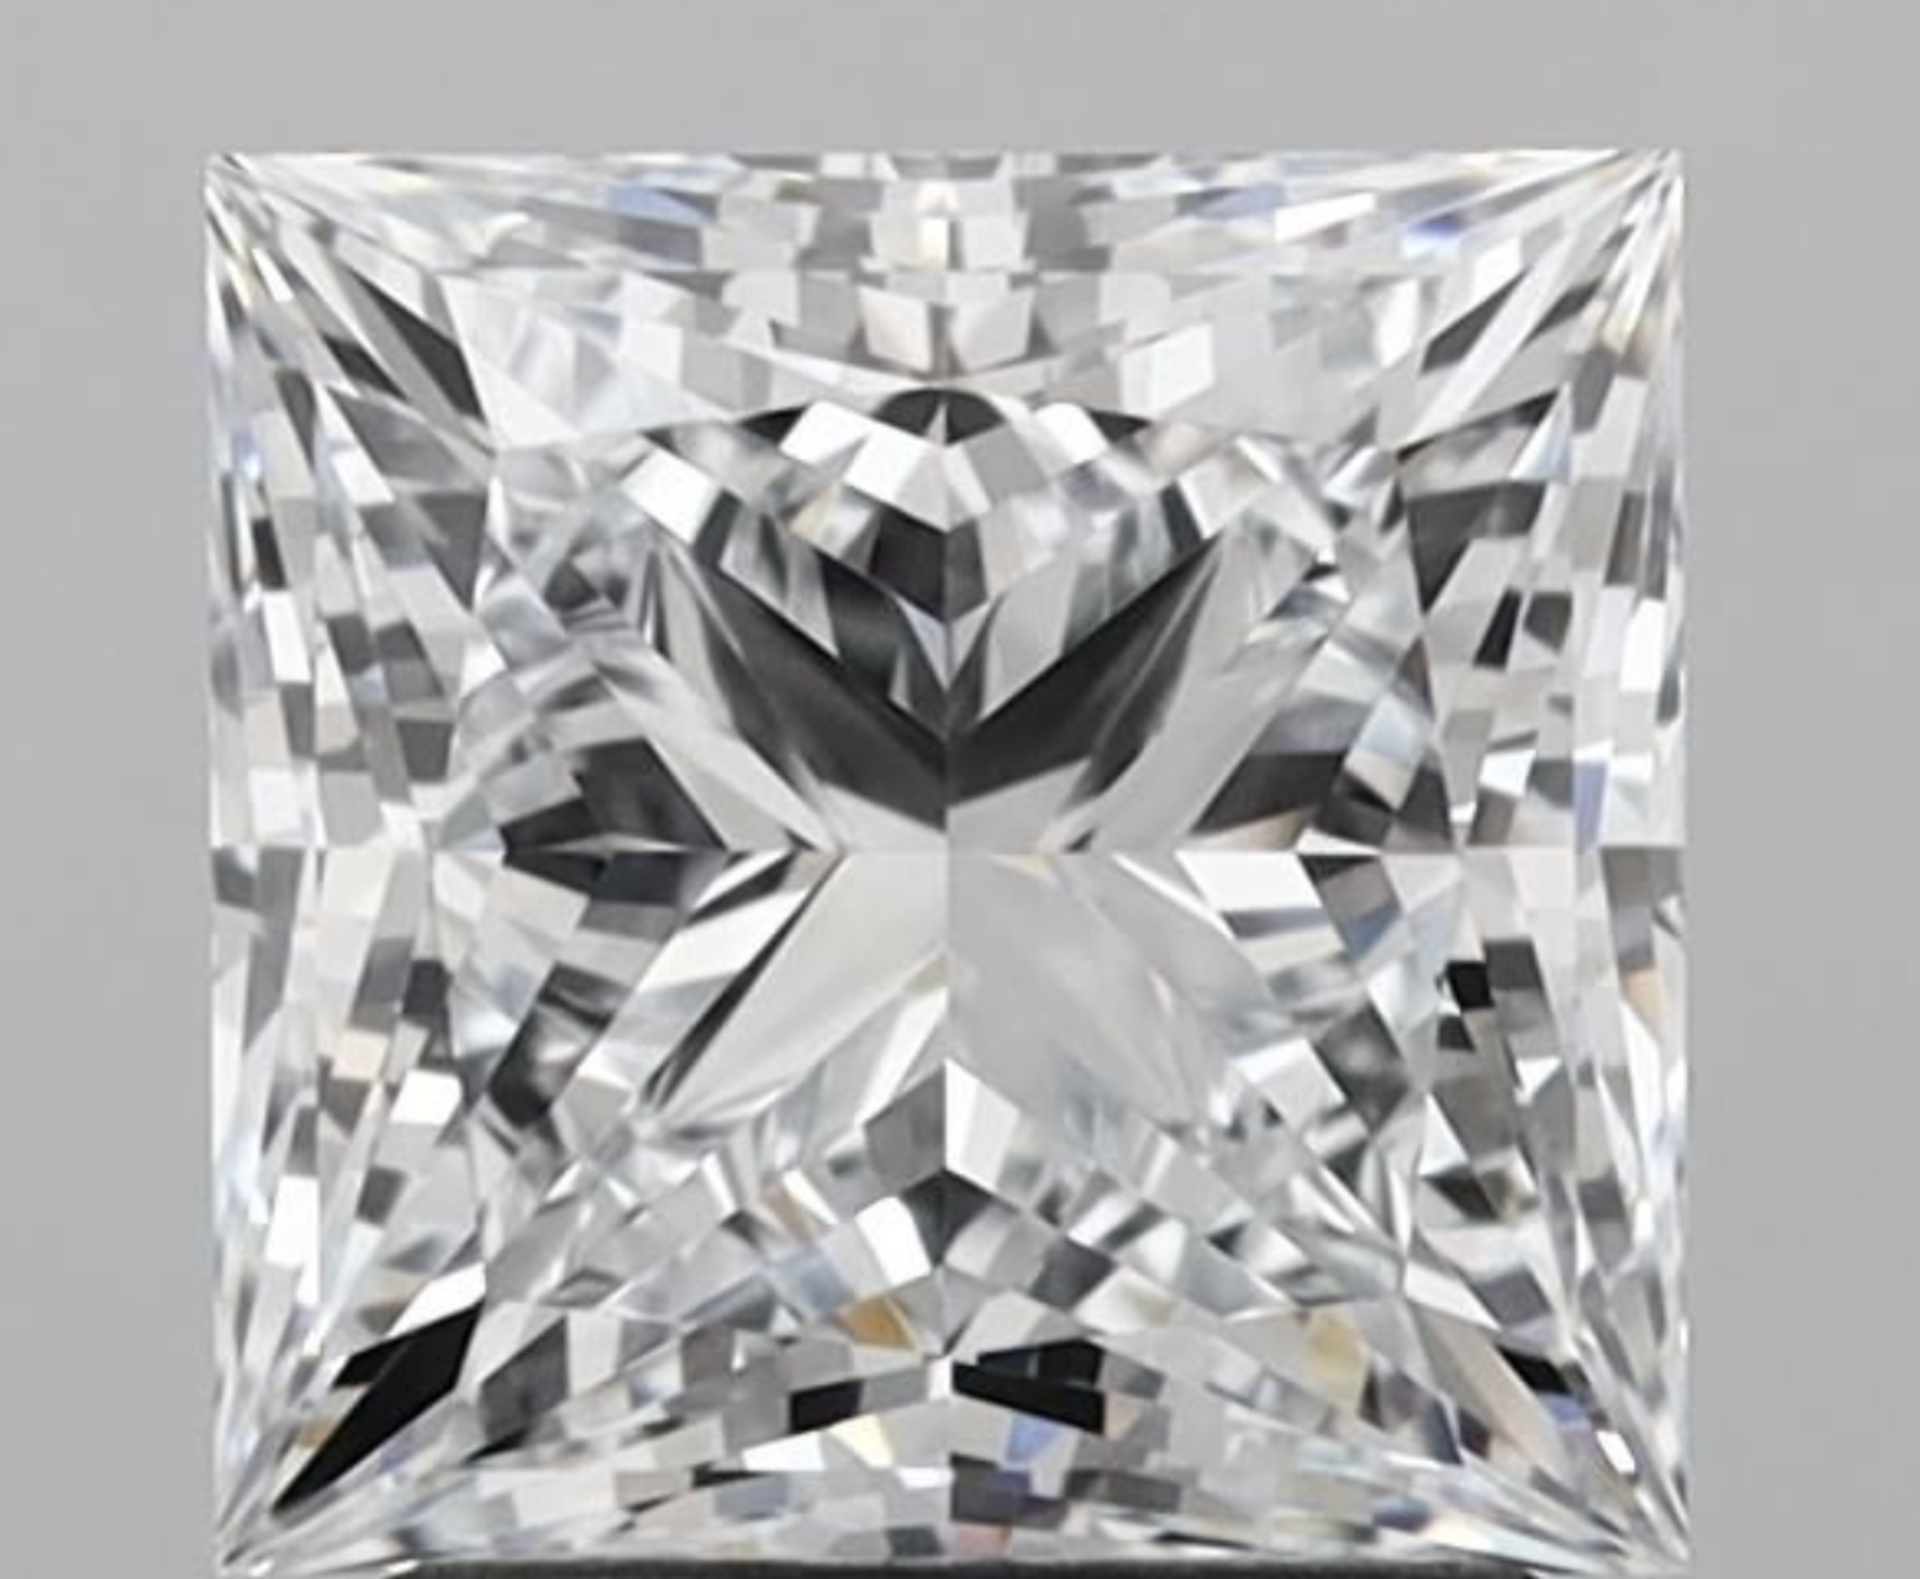 ** ON SALE ** Single - IGI Princess Cut Diamond F Colour VVS2 Clarity 2.10 Carat - LG550245235